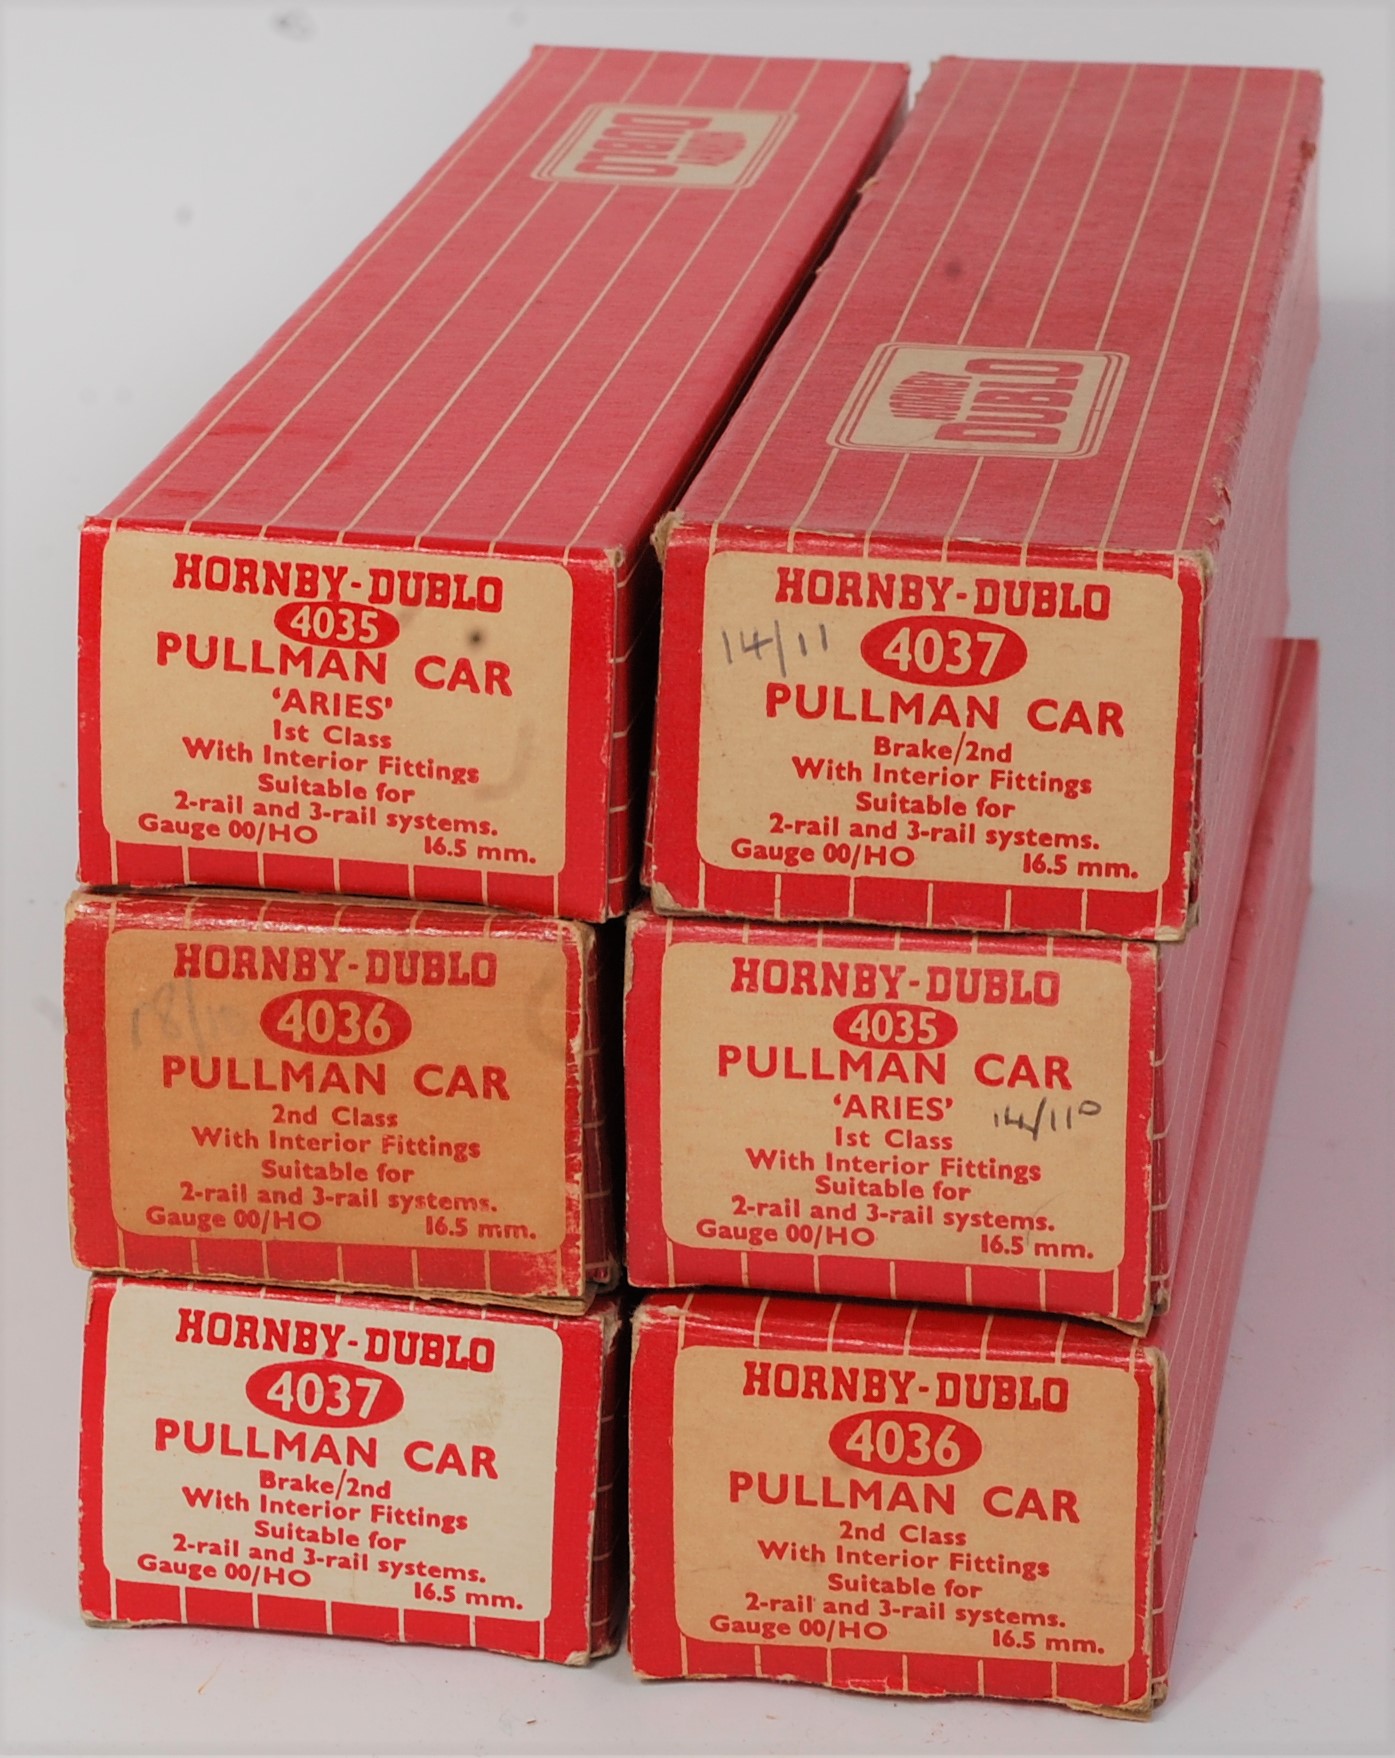 Six Hornby Dublo Pullman cars, plastic wheels - 1 x 4037 Br/2nd Car No. 79, 2x 4035 1st class Aries,